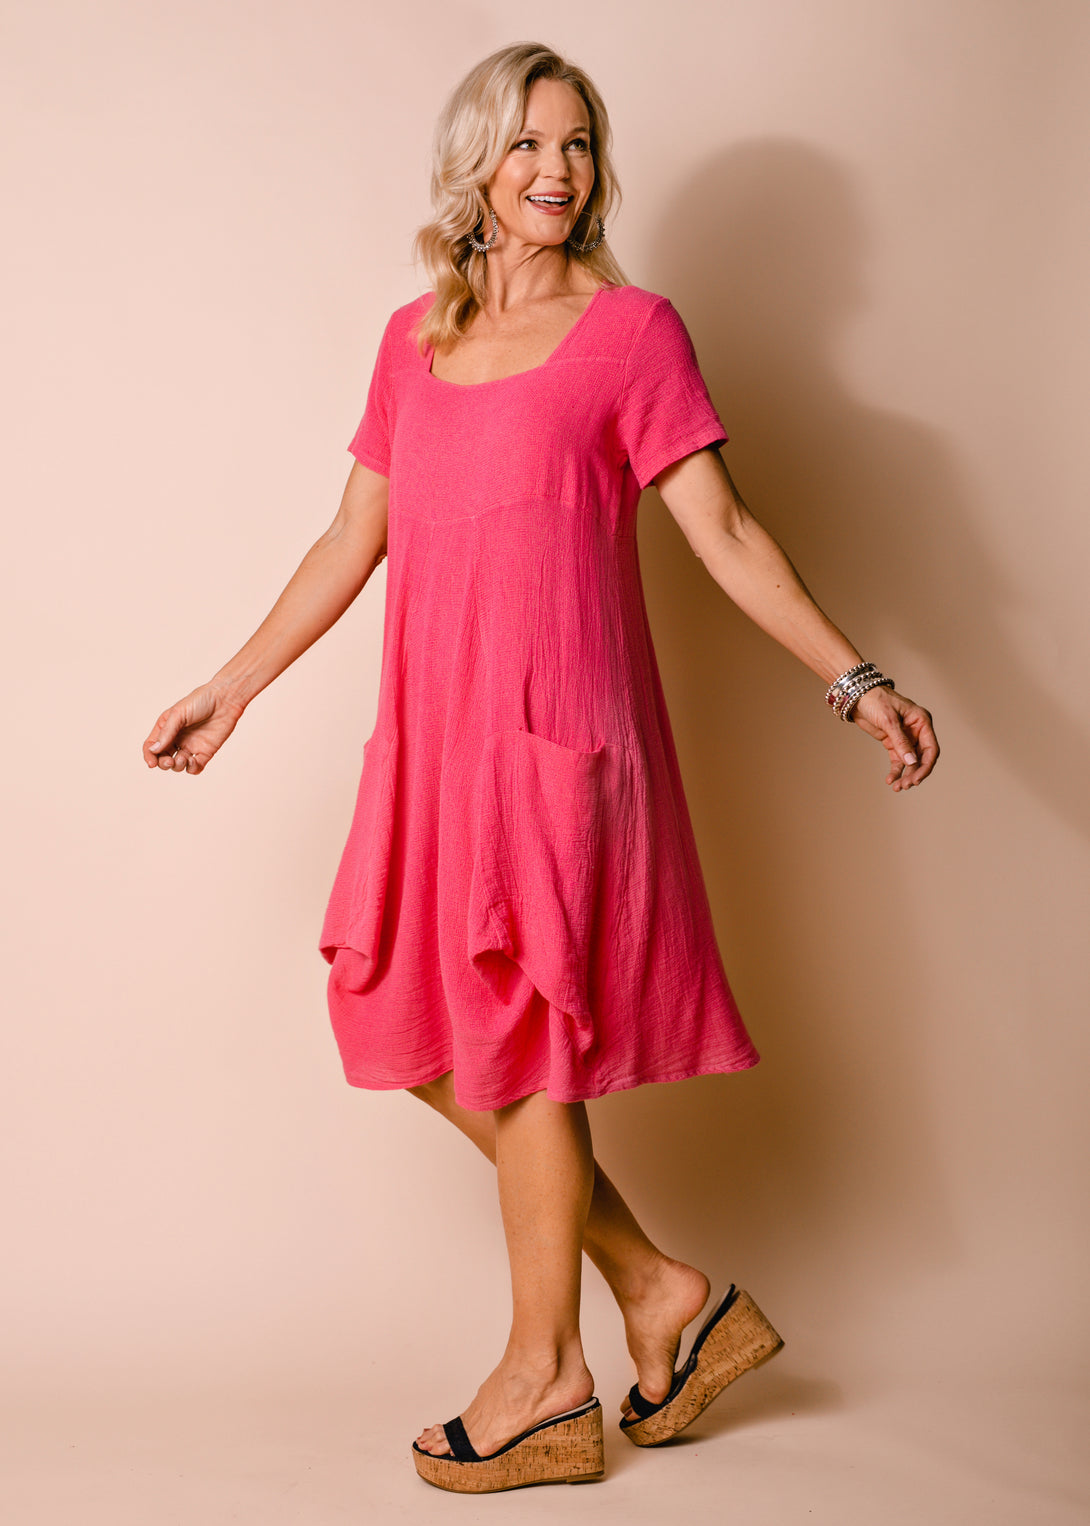 Britan Linen Blend Dress in Raspberry Sorbet - Imagine Fashion